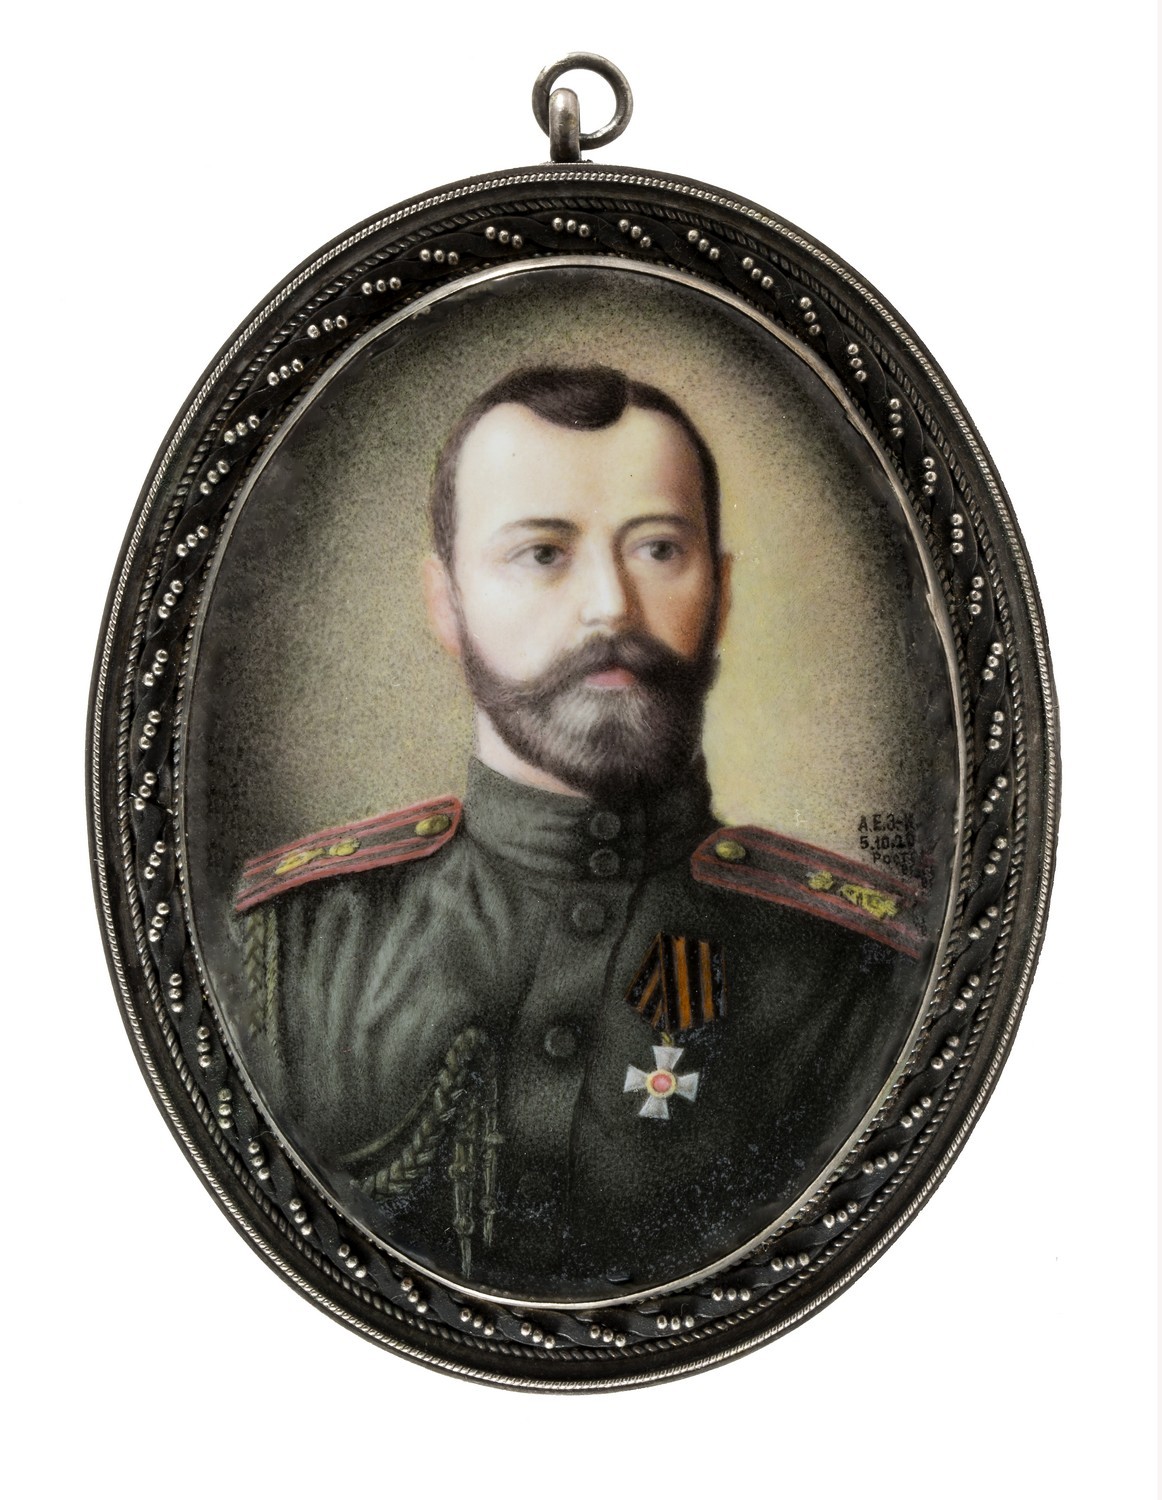 804. А. Е. Зайцев, ювелир Л. Н. Матакова. Портрет государя императора Николая II